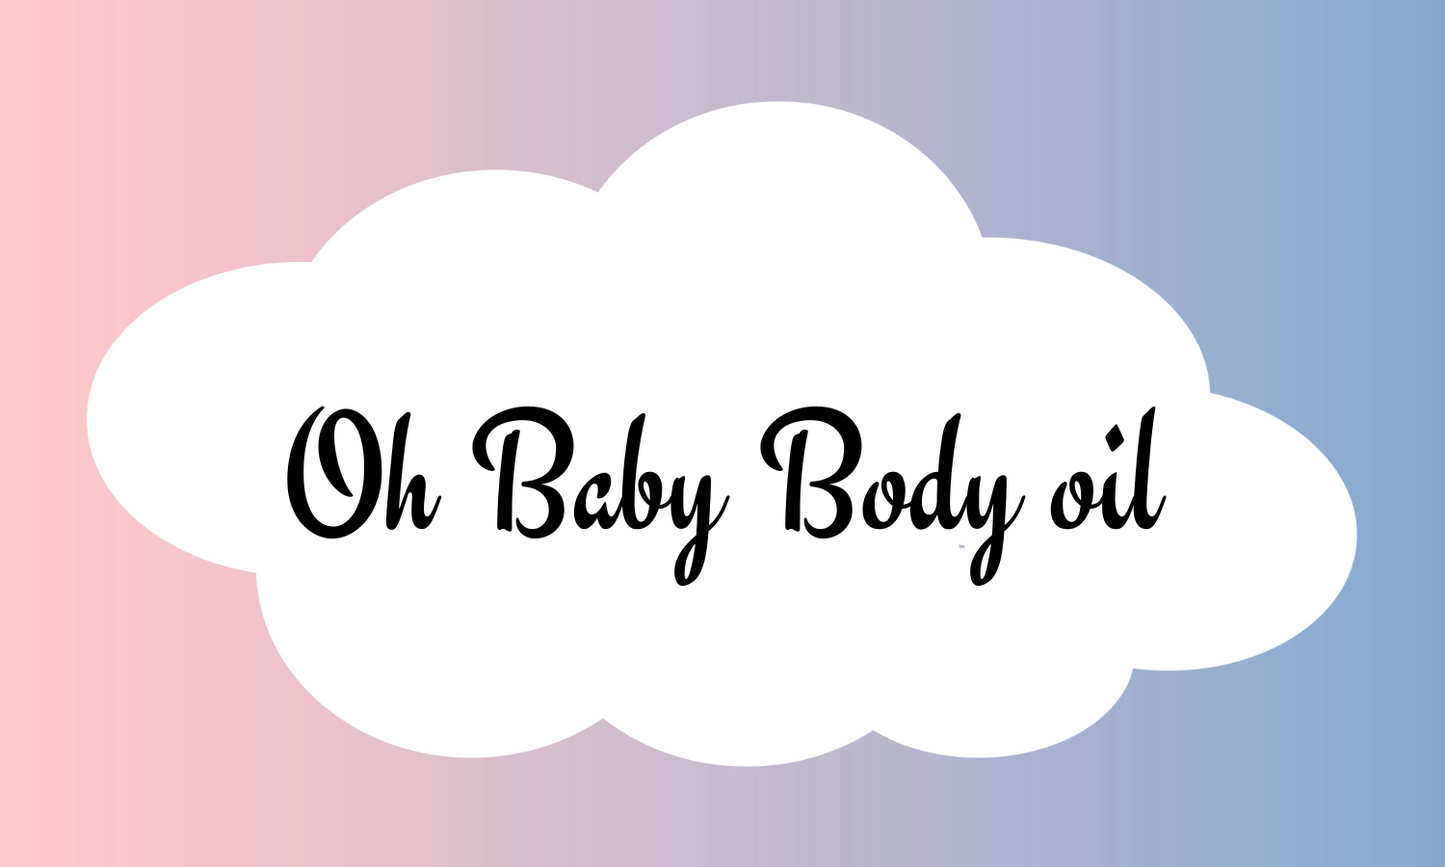 Oh Baby Body Oil